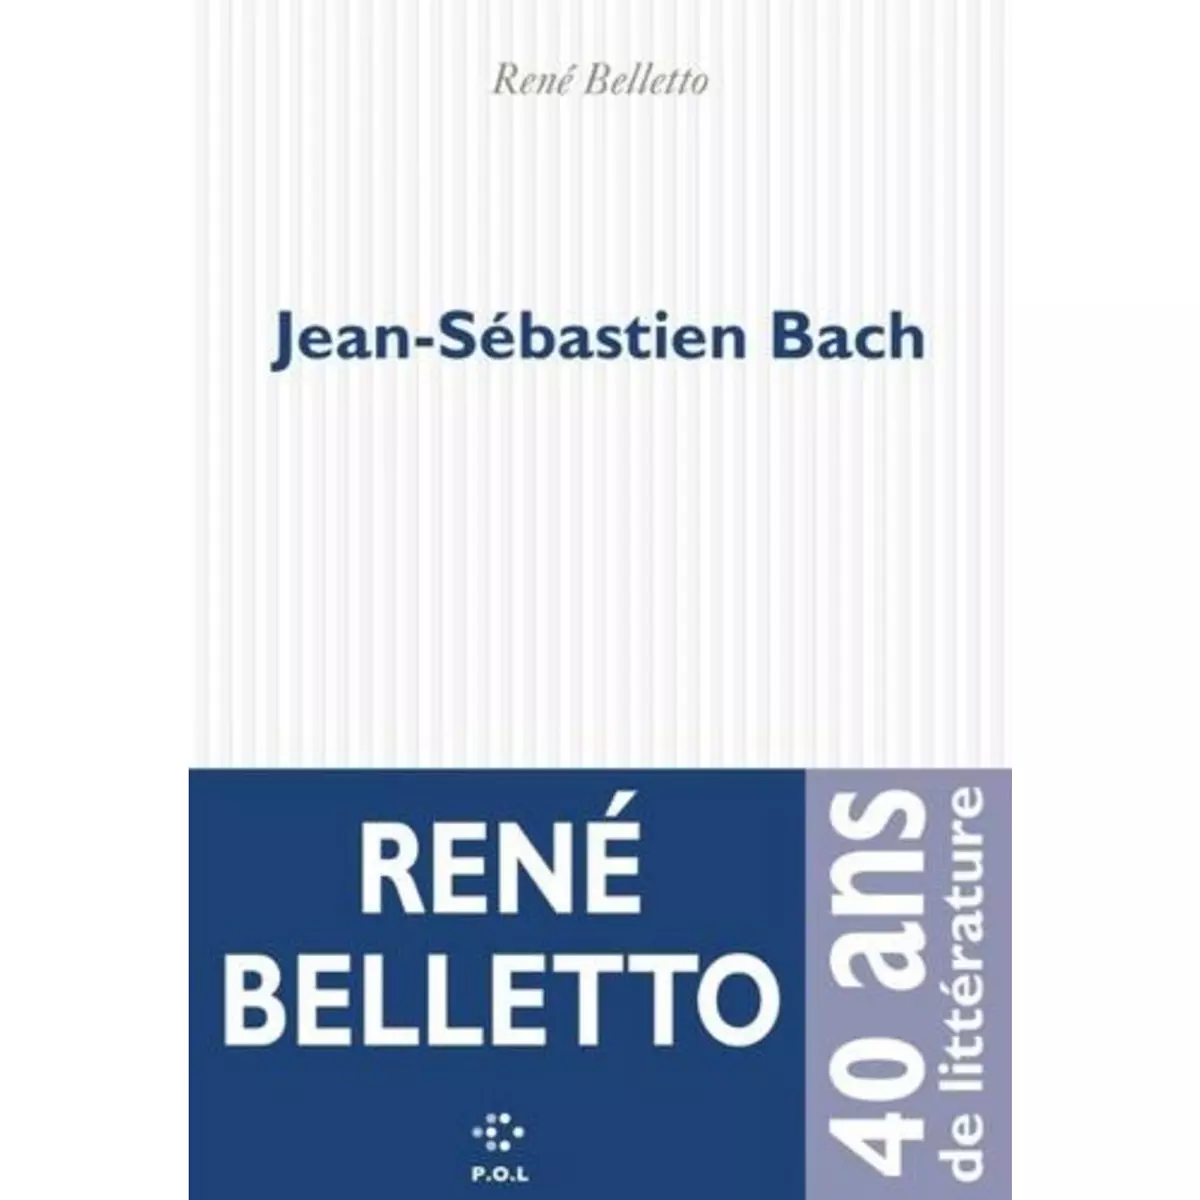  JEAN-SEBASTIEN BACH, Belletto René